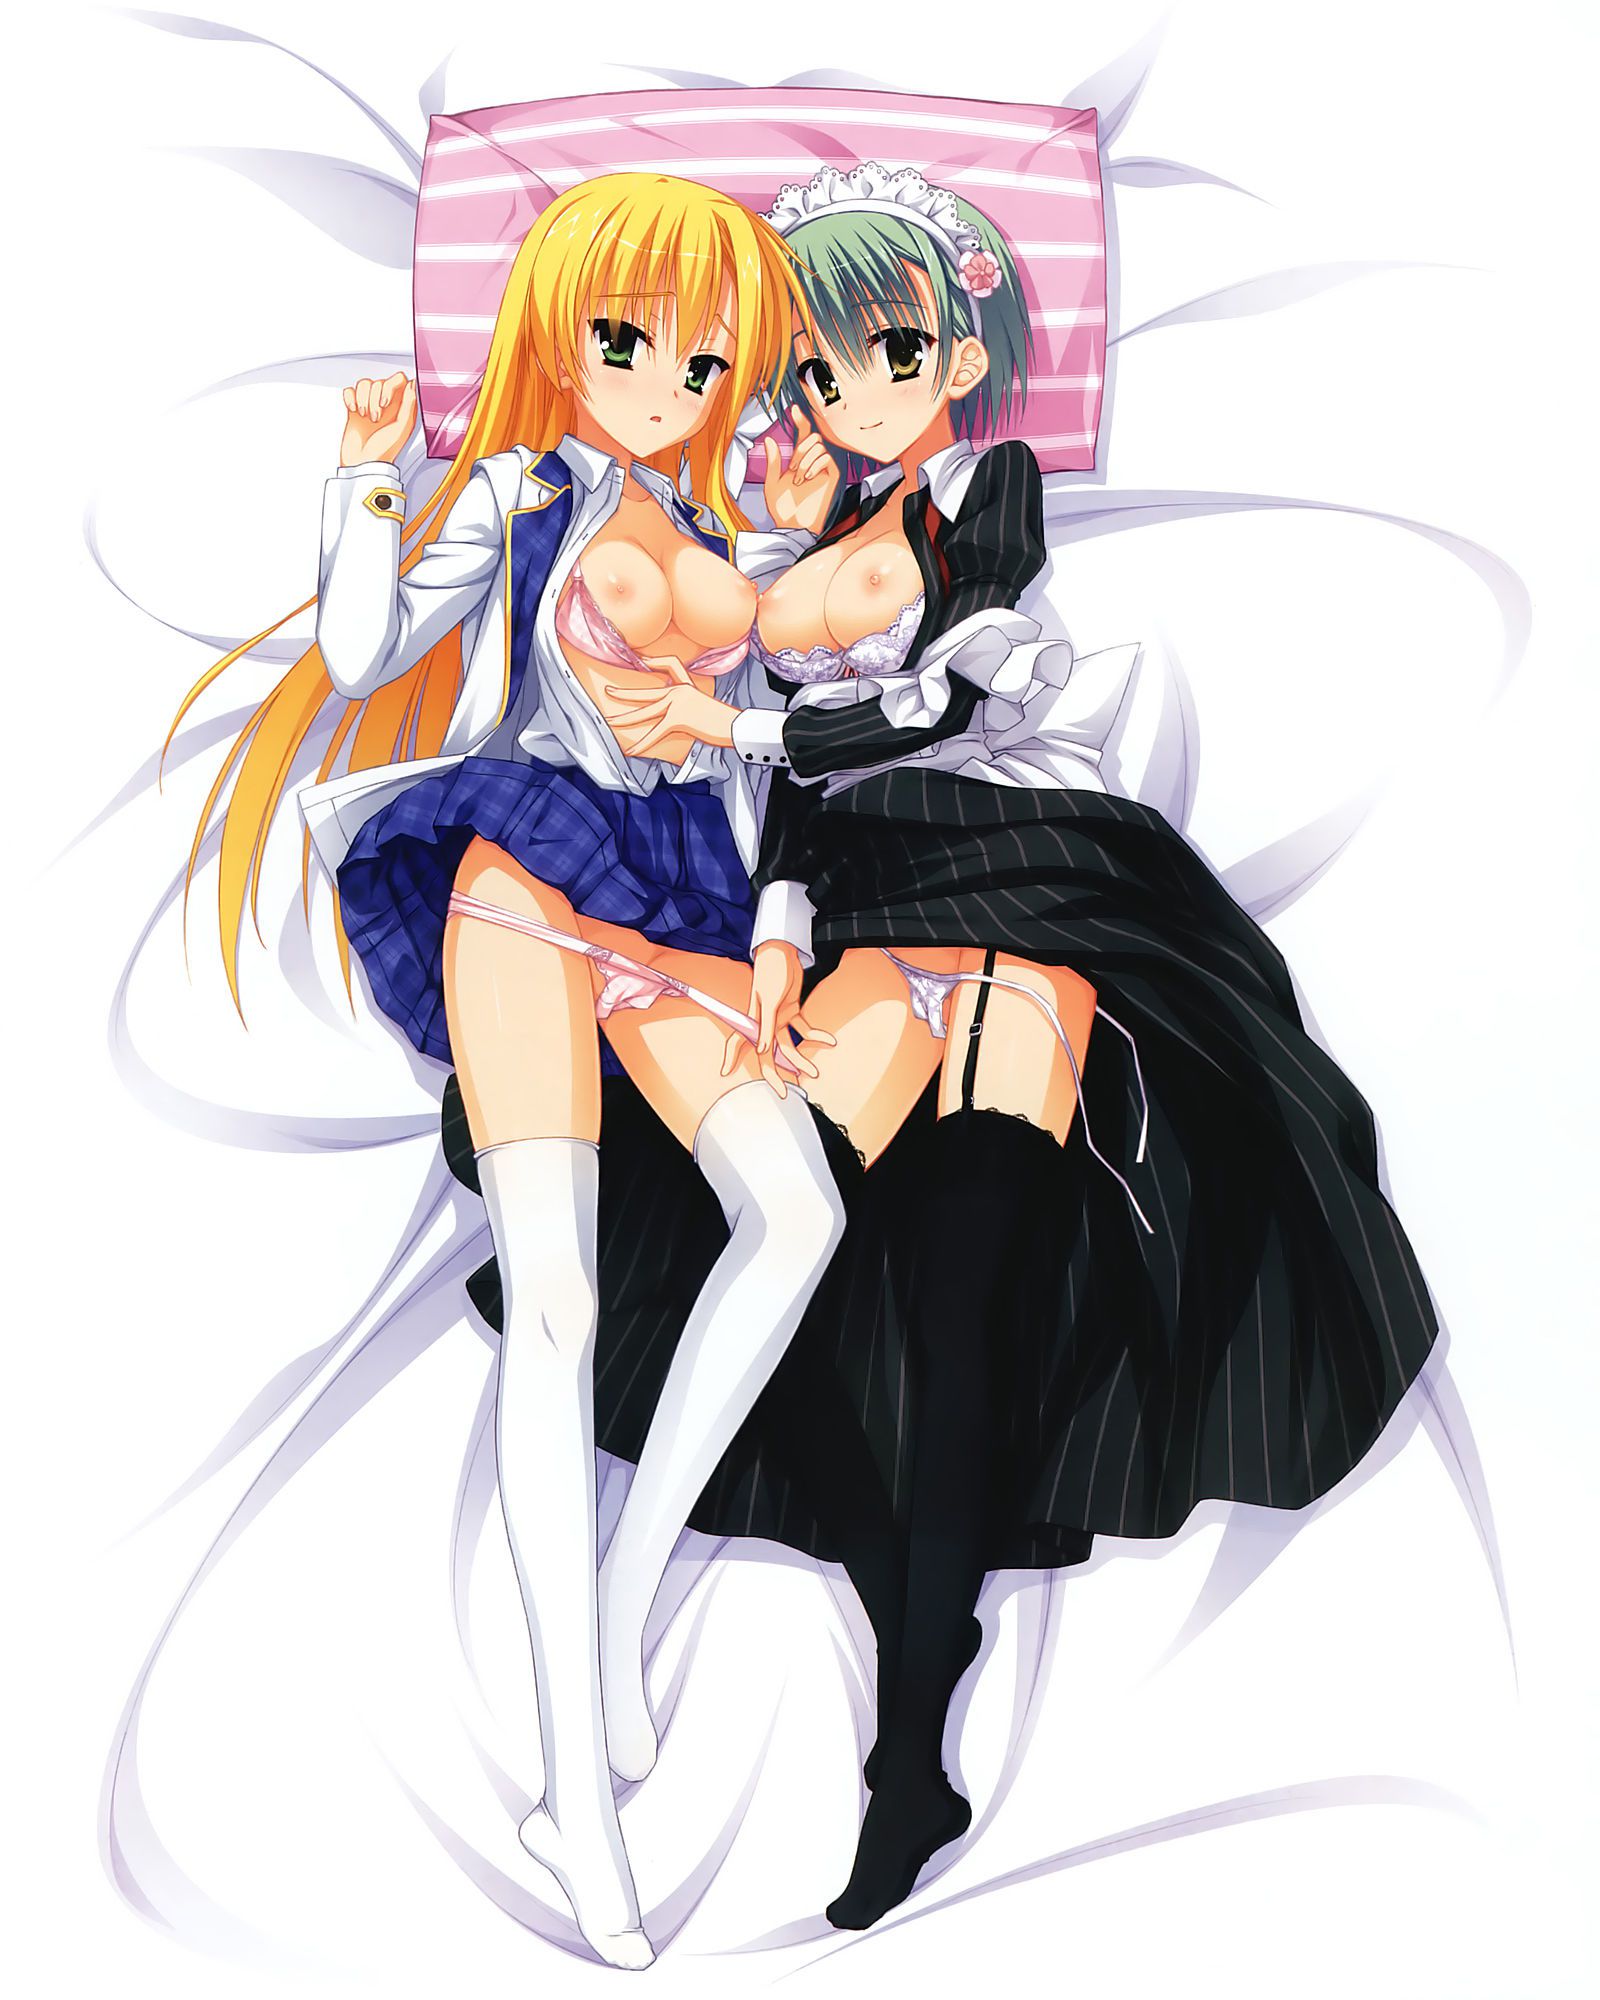 [Maid] erotica image summary of two-dimensional maid beautiful girl. vol.27 36